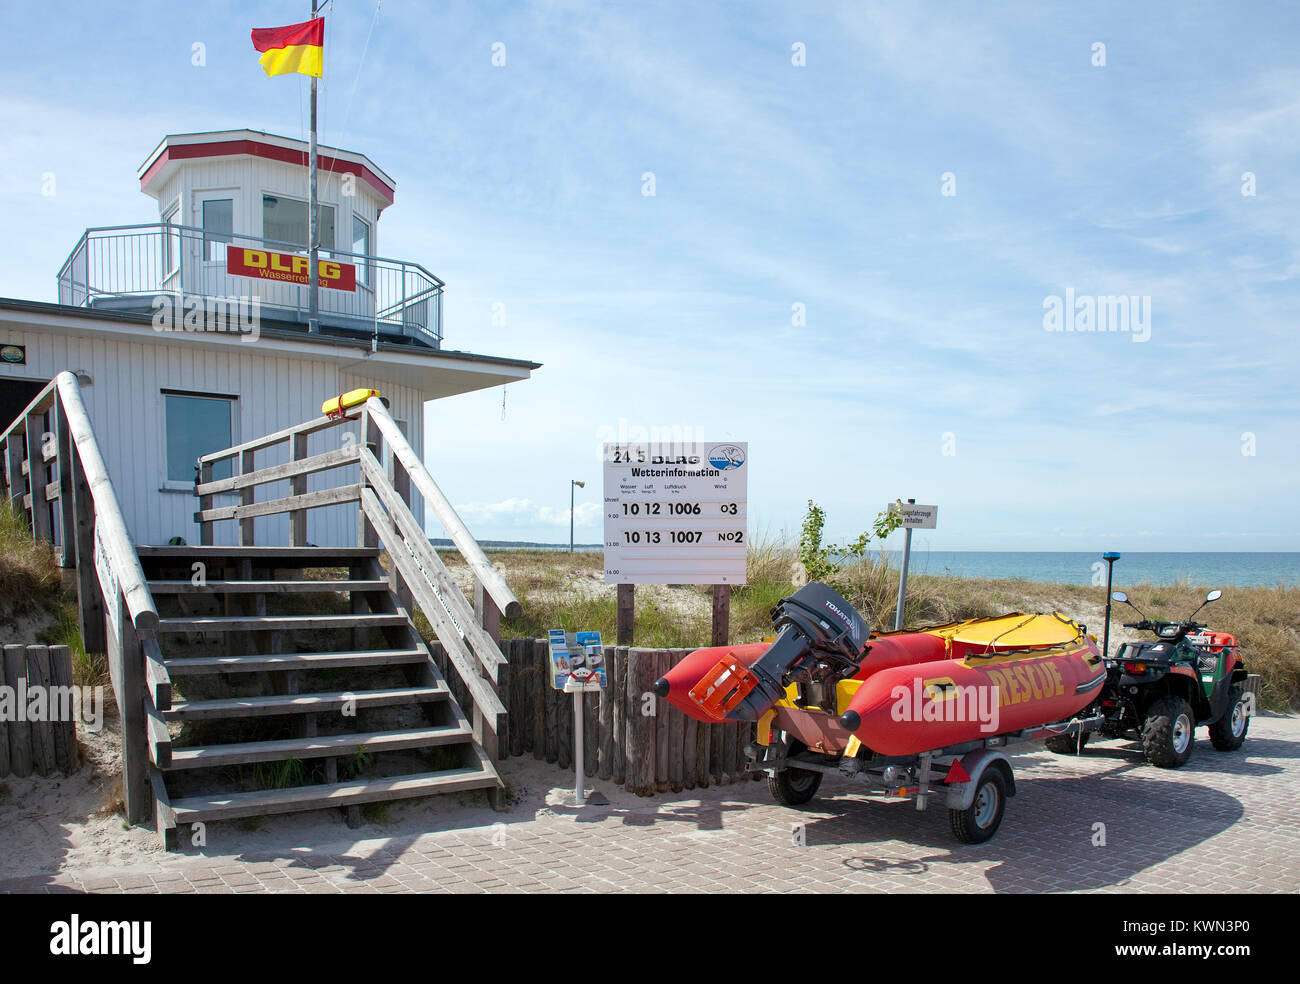 DLRG tedesco Lifeguard Association presso la spiaggia di Prerow, Fishland, Meclemburgo-Pomerania, Mar Baltico, Germania, Europa Foto Stock